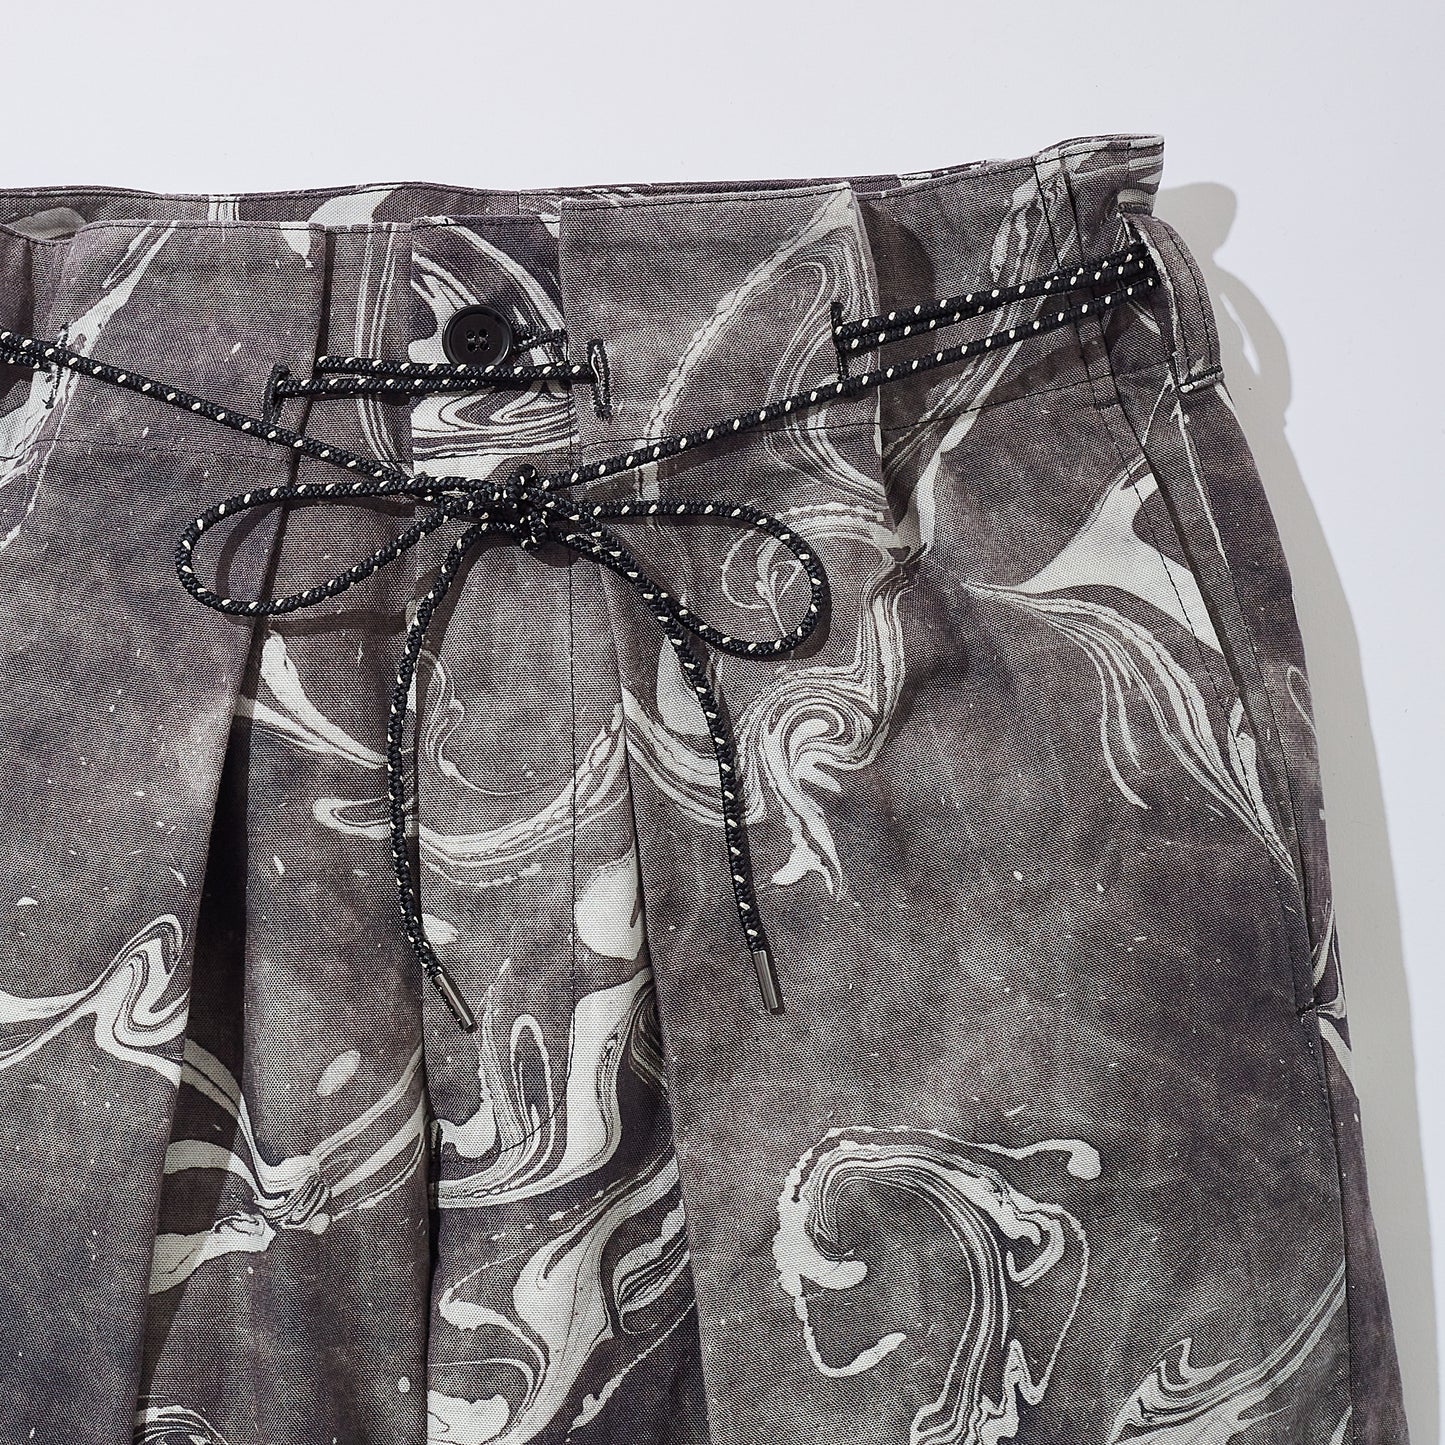 Suminagashi Printed Hakama Trousers